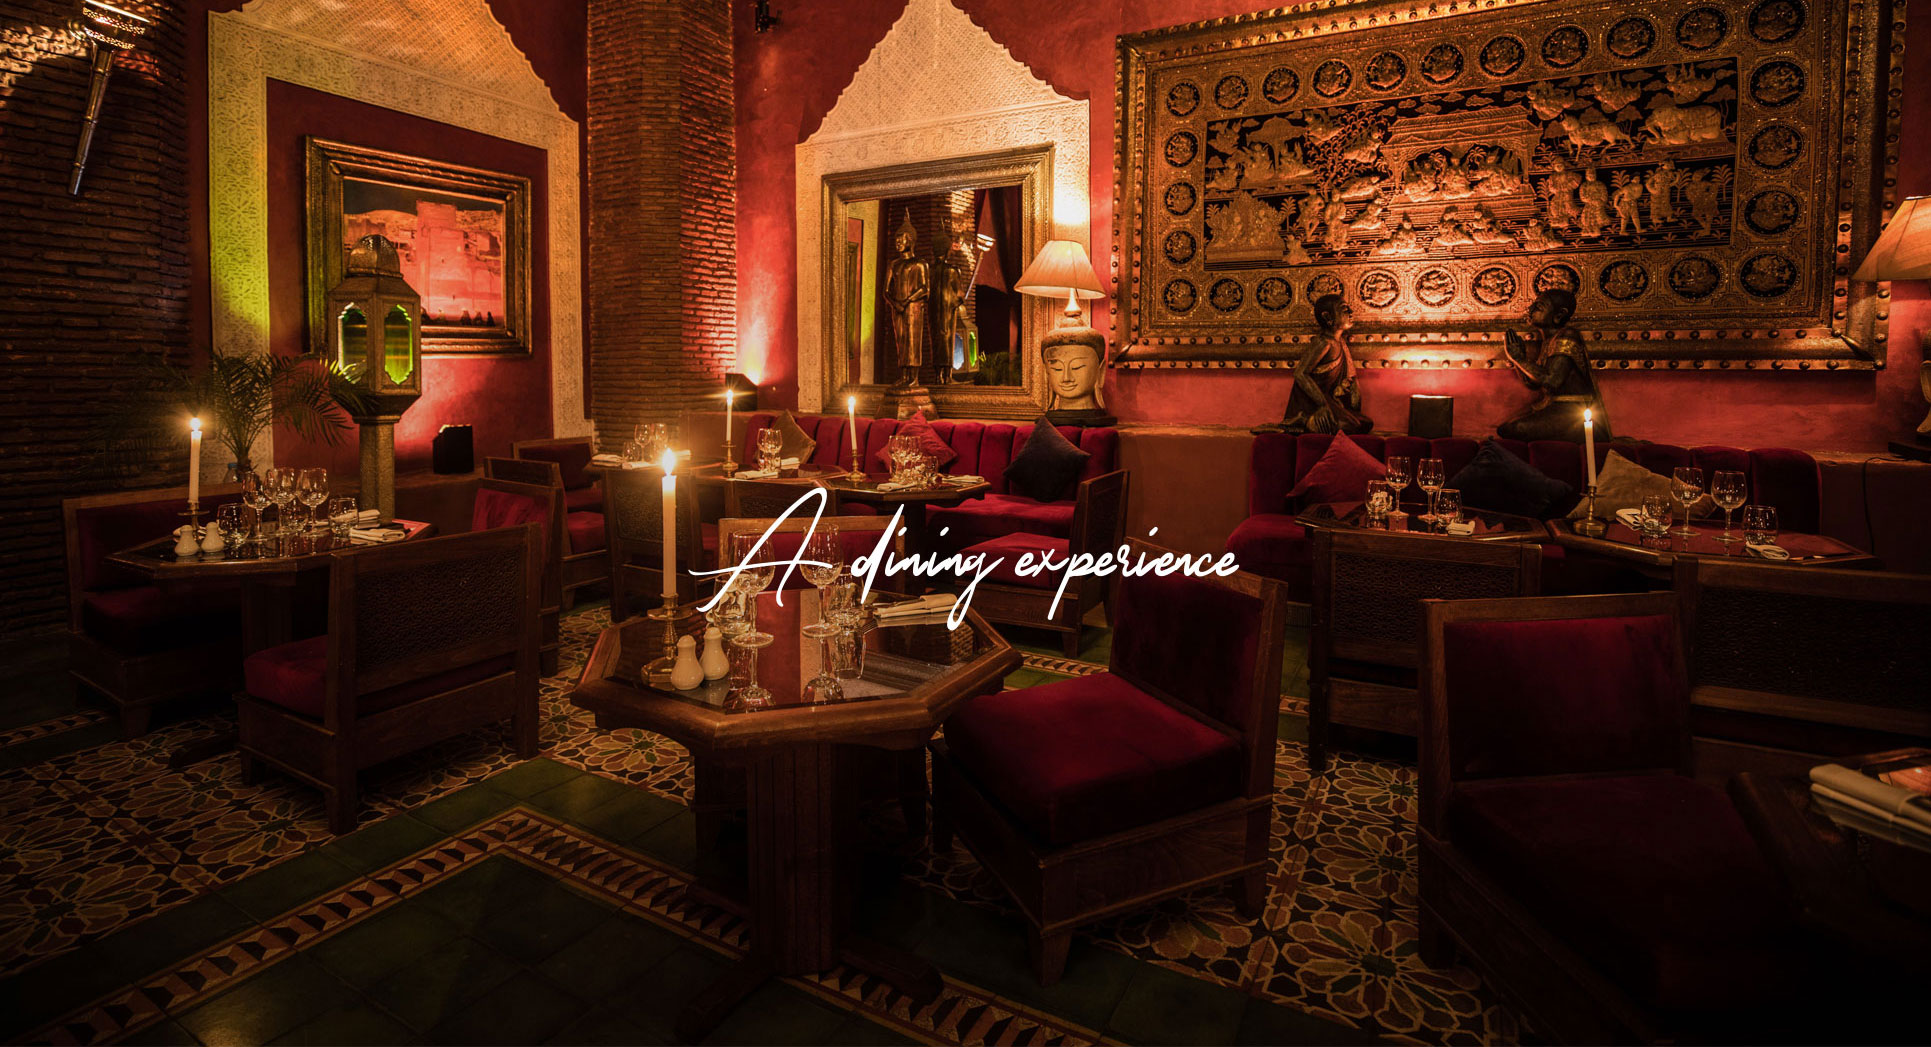 Restaurant diner spectacle Marrakech